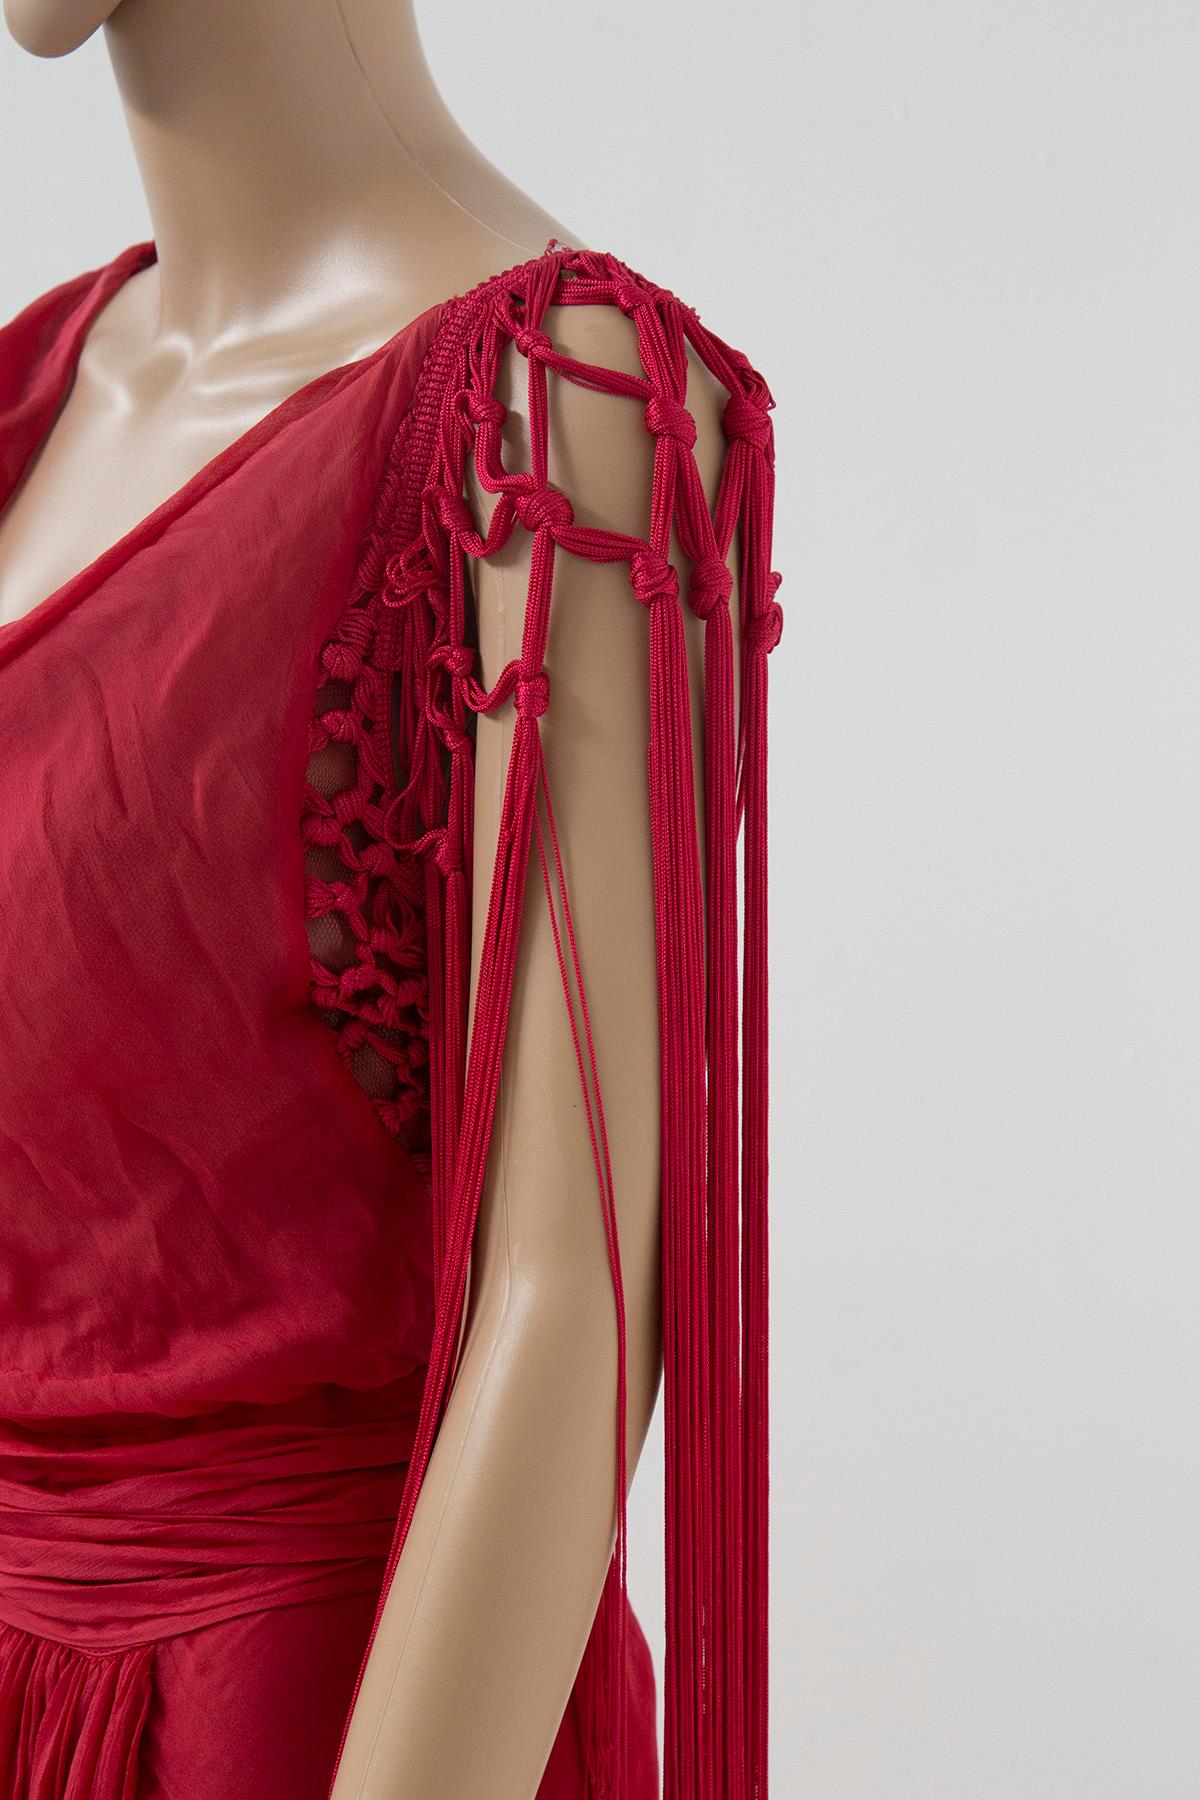 Women's Red Silk Long Dress Alberta Ferretti For Sale